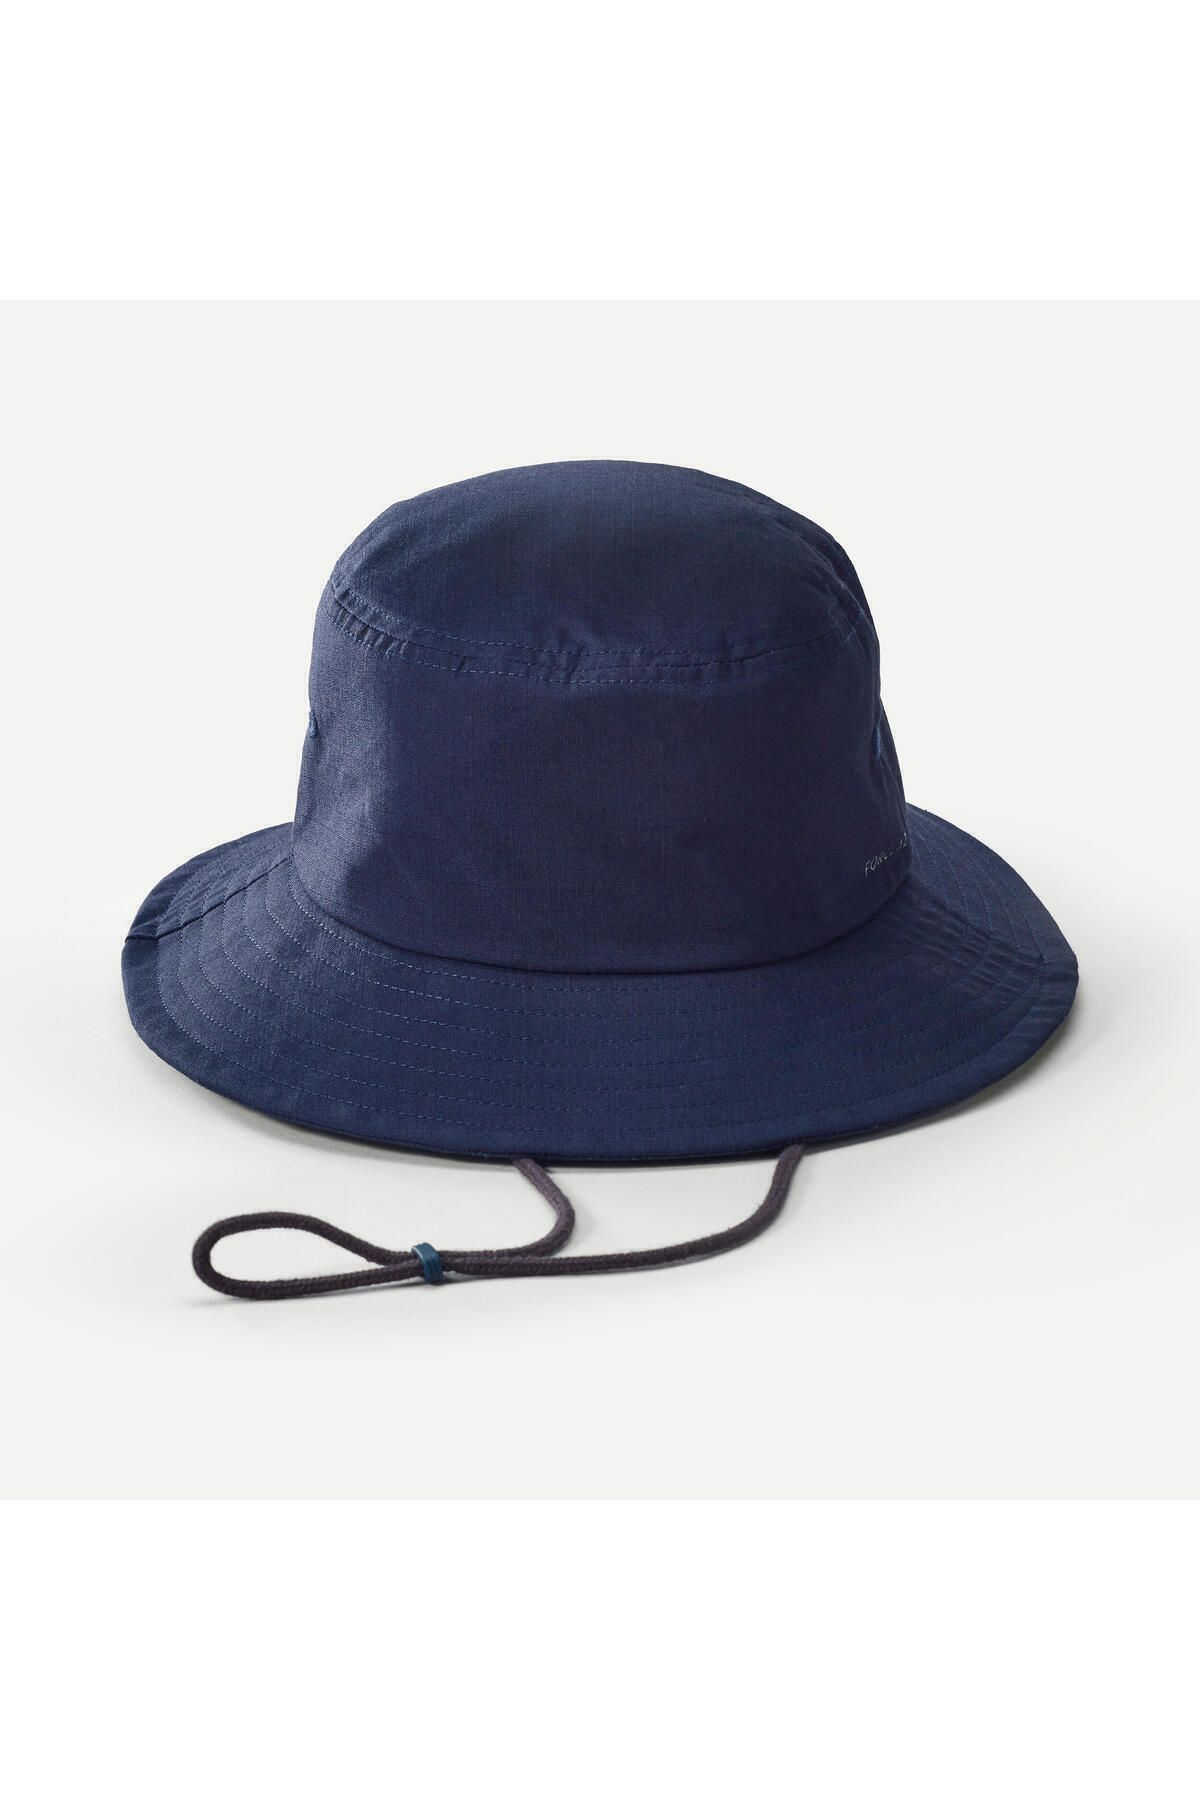 Decathlon Forclaz Outdoor Trekking Şapkası - Mavi - Mt100